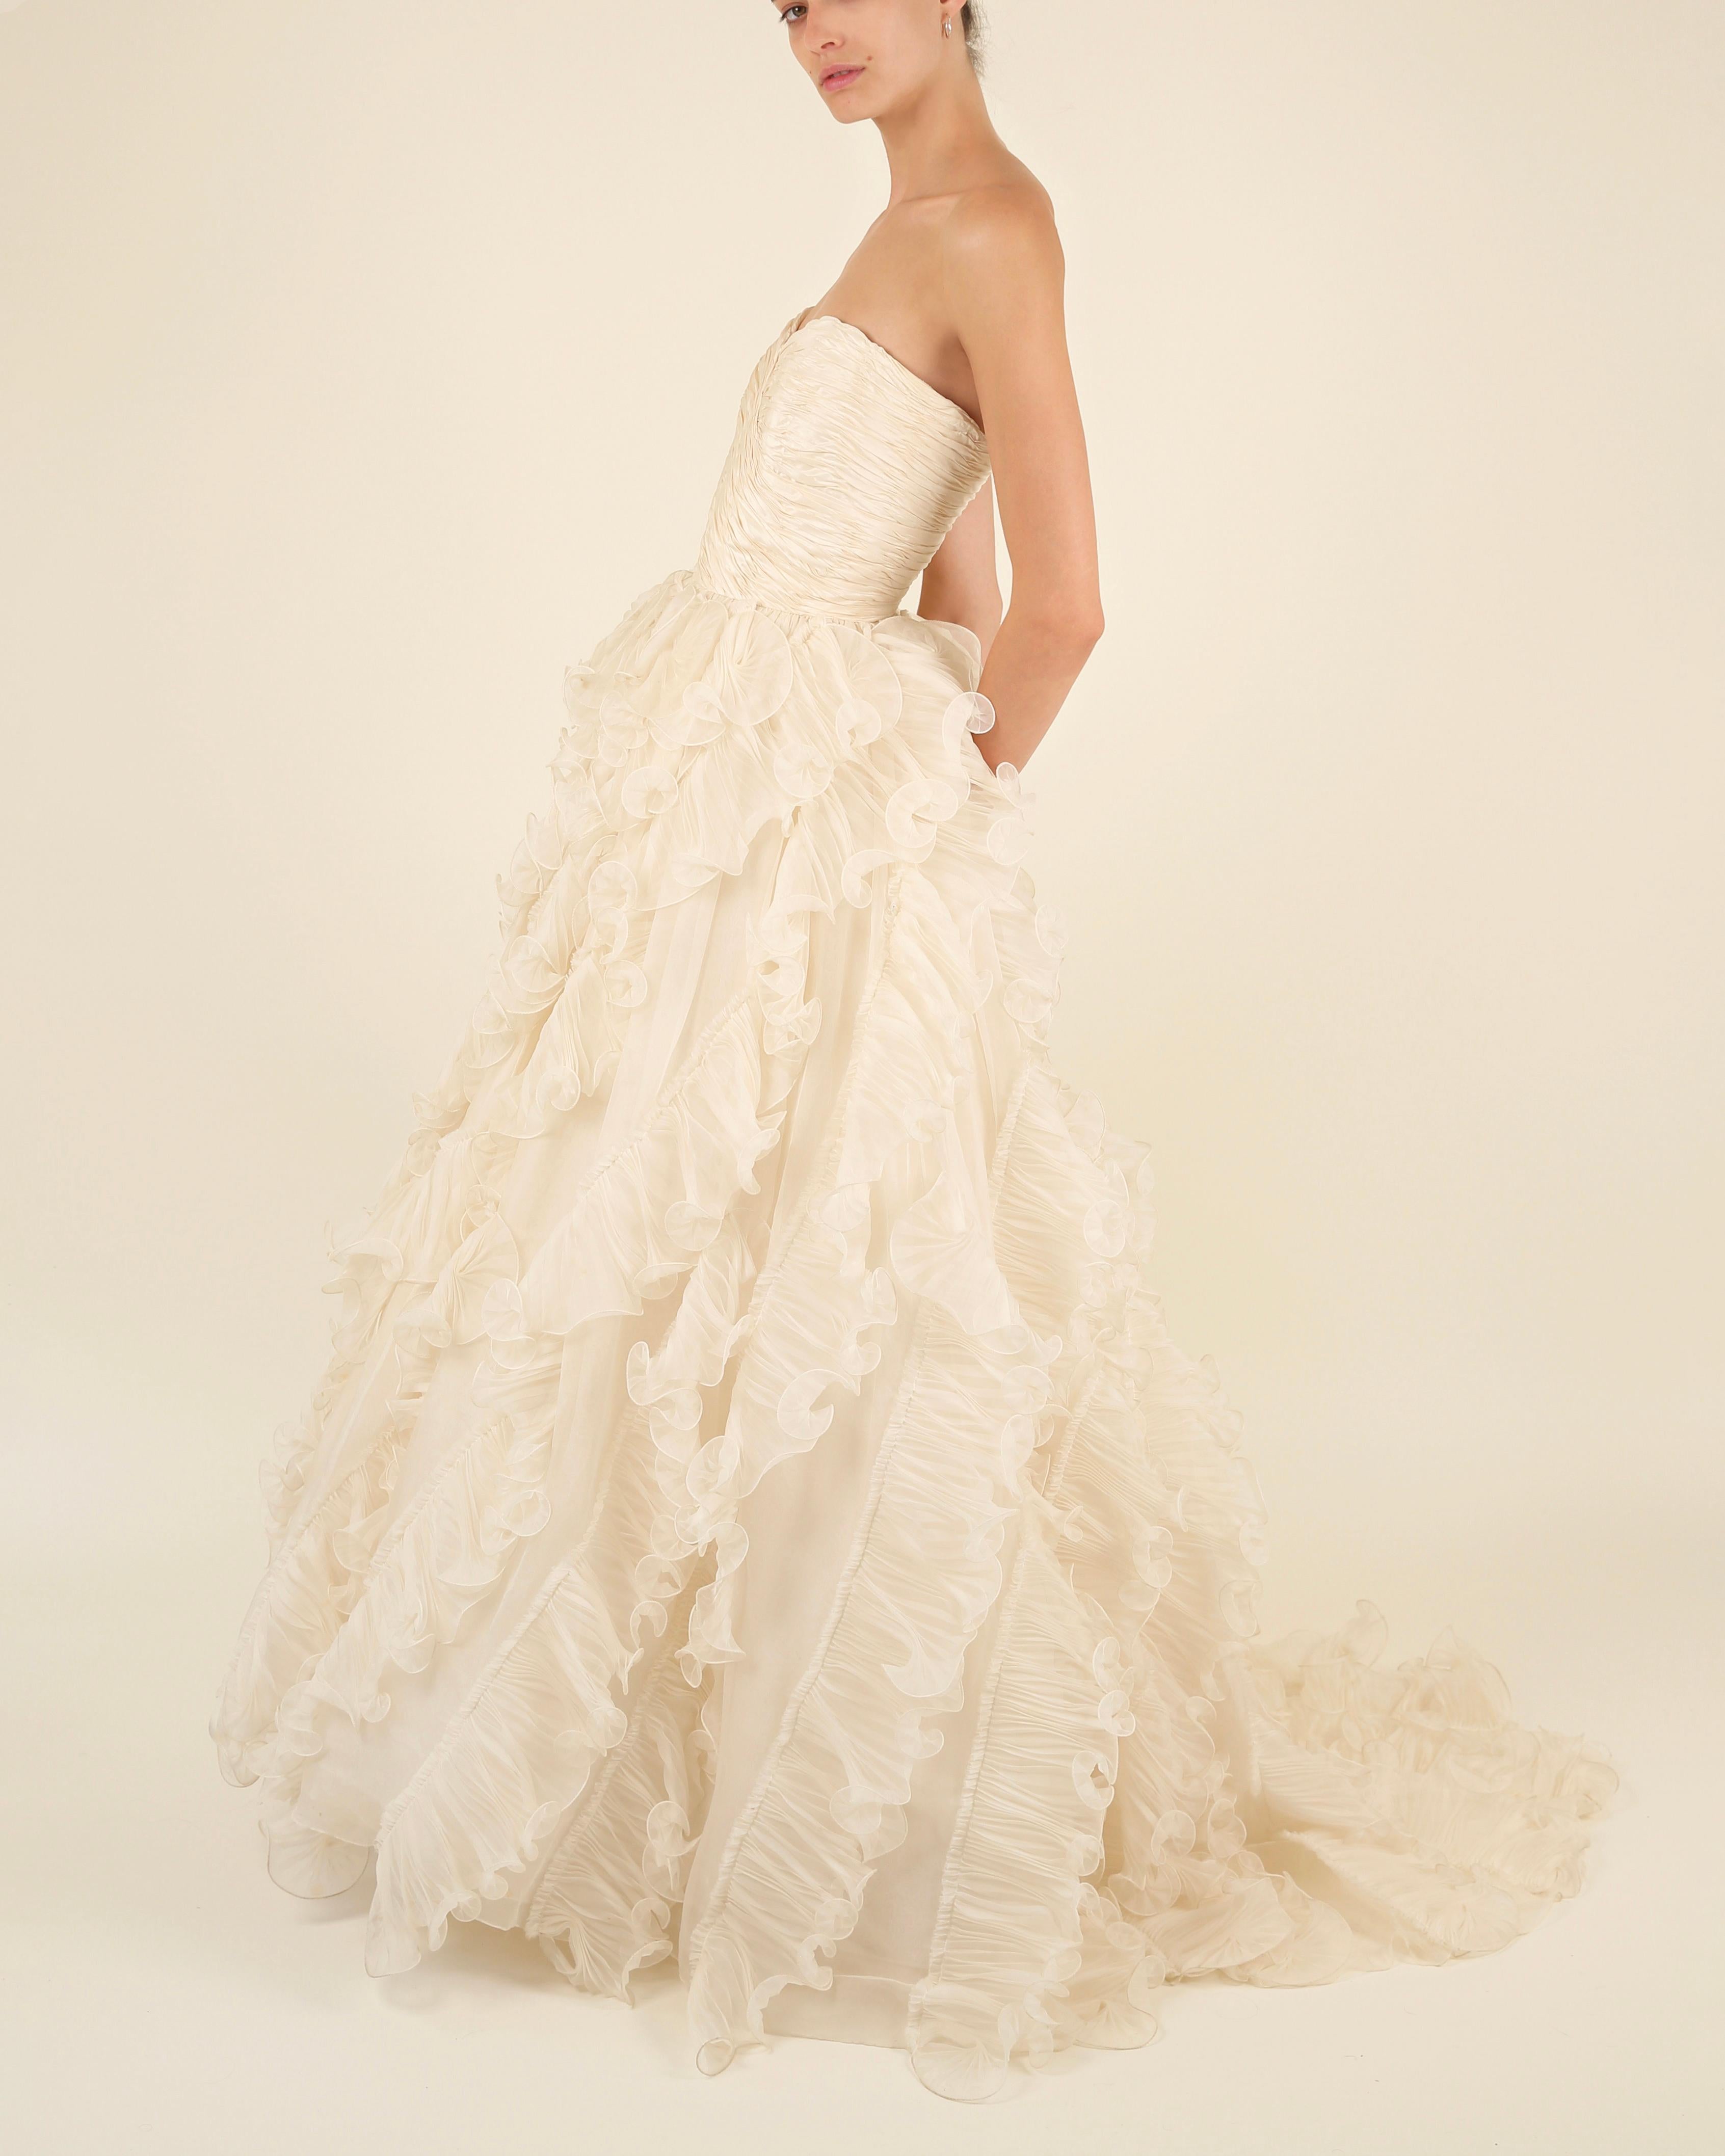 Oscar de la Renta S/S08 bridal ivory strapless vintage ruffle wedding dress gown For Sale 2